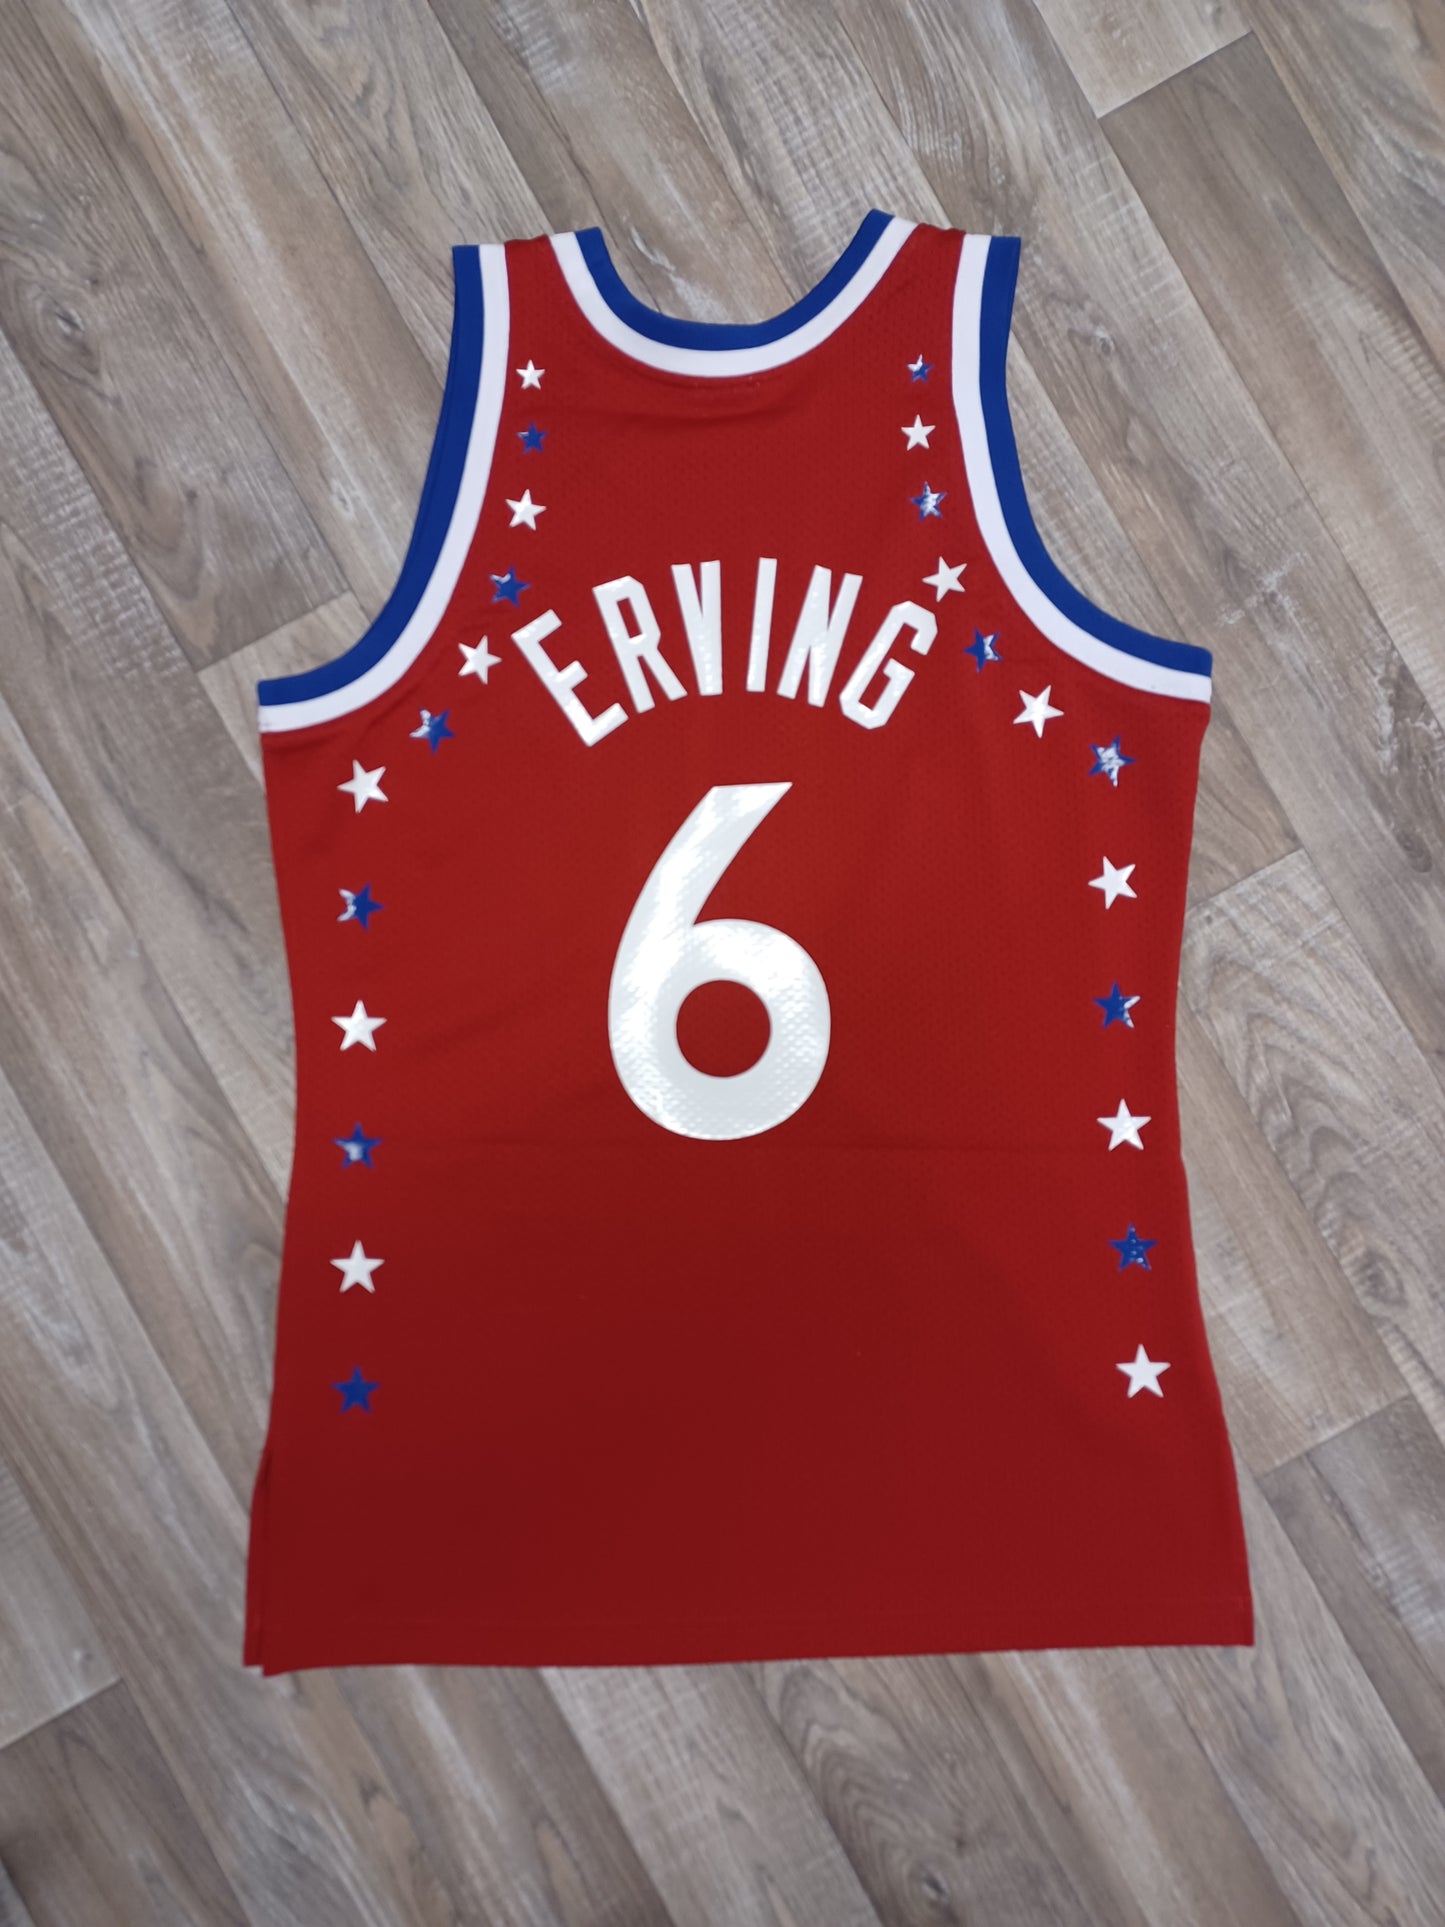 Julius Dr J Erving Authentic NBA All Star 1983 Jersey Size Medium